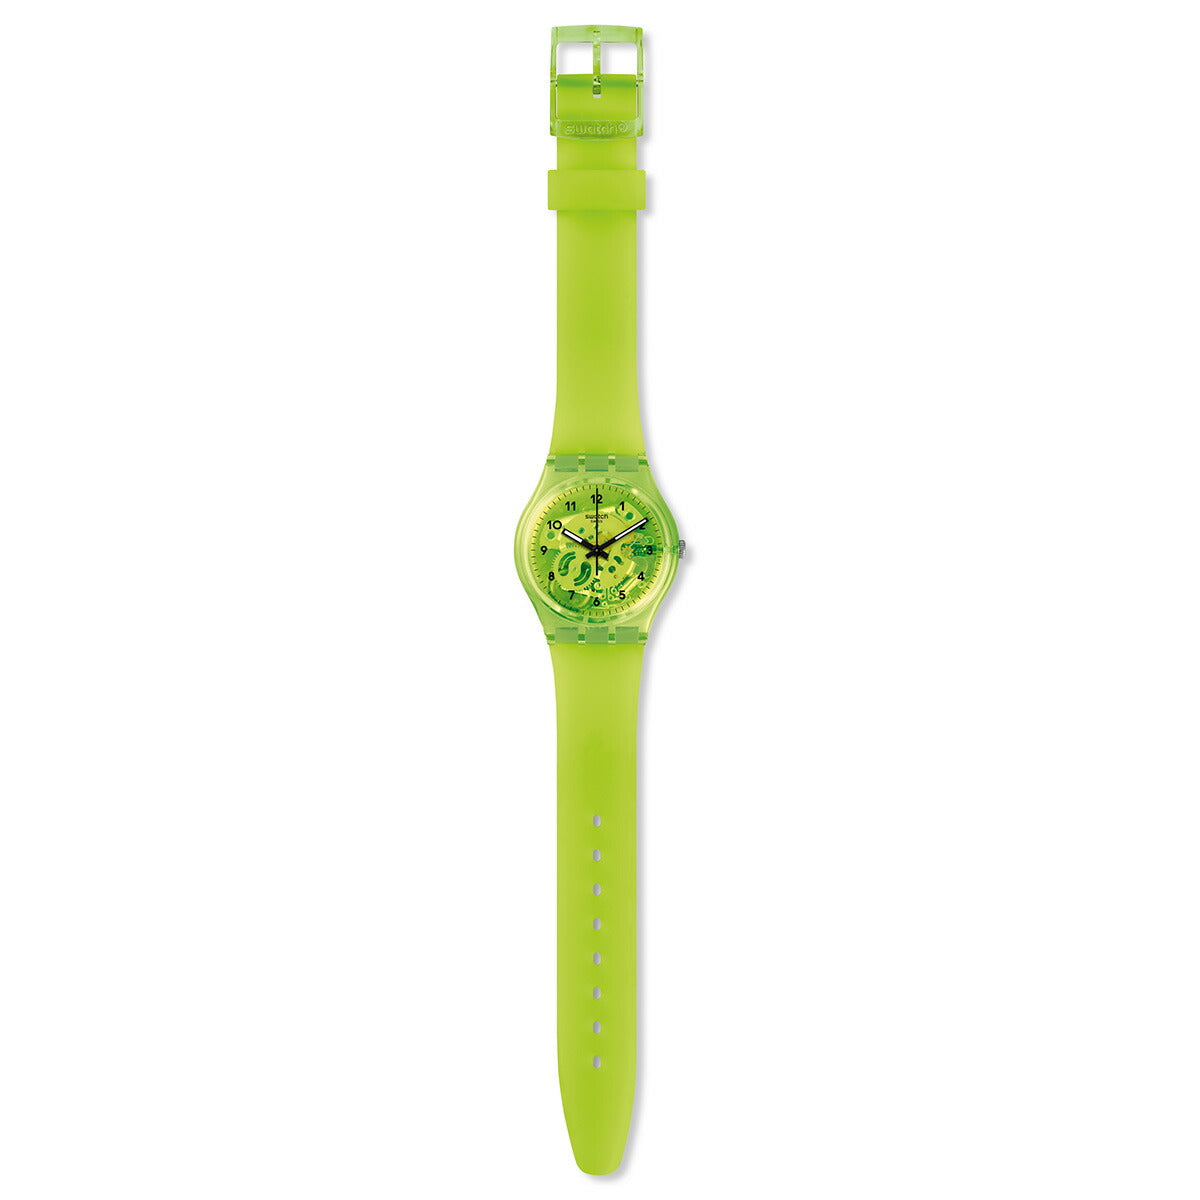 swatch スウォッチ 腕時計 メンズ レディース オリジナルズ ジェント レモン・フレーバー Originals Gent LEMON FLAVOUR GG227